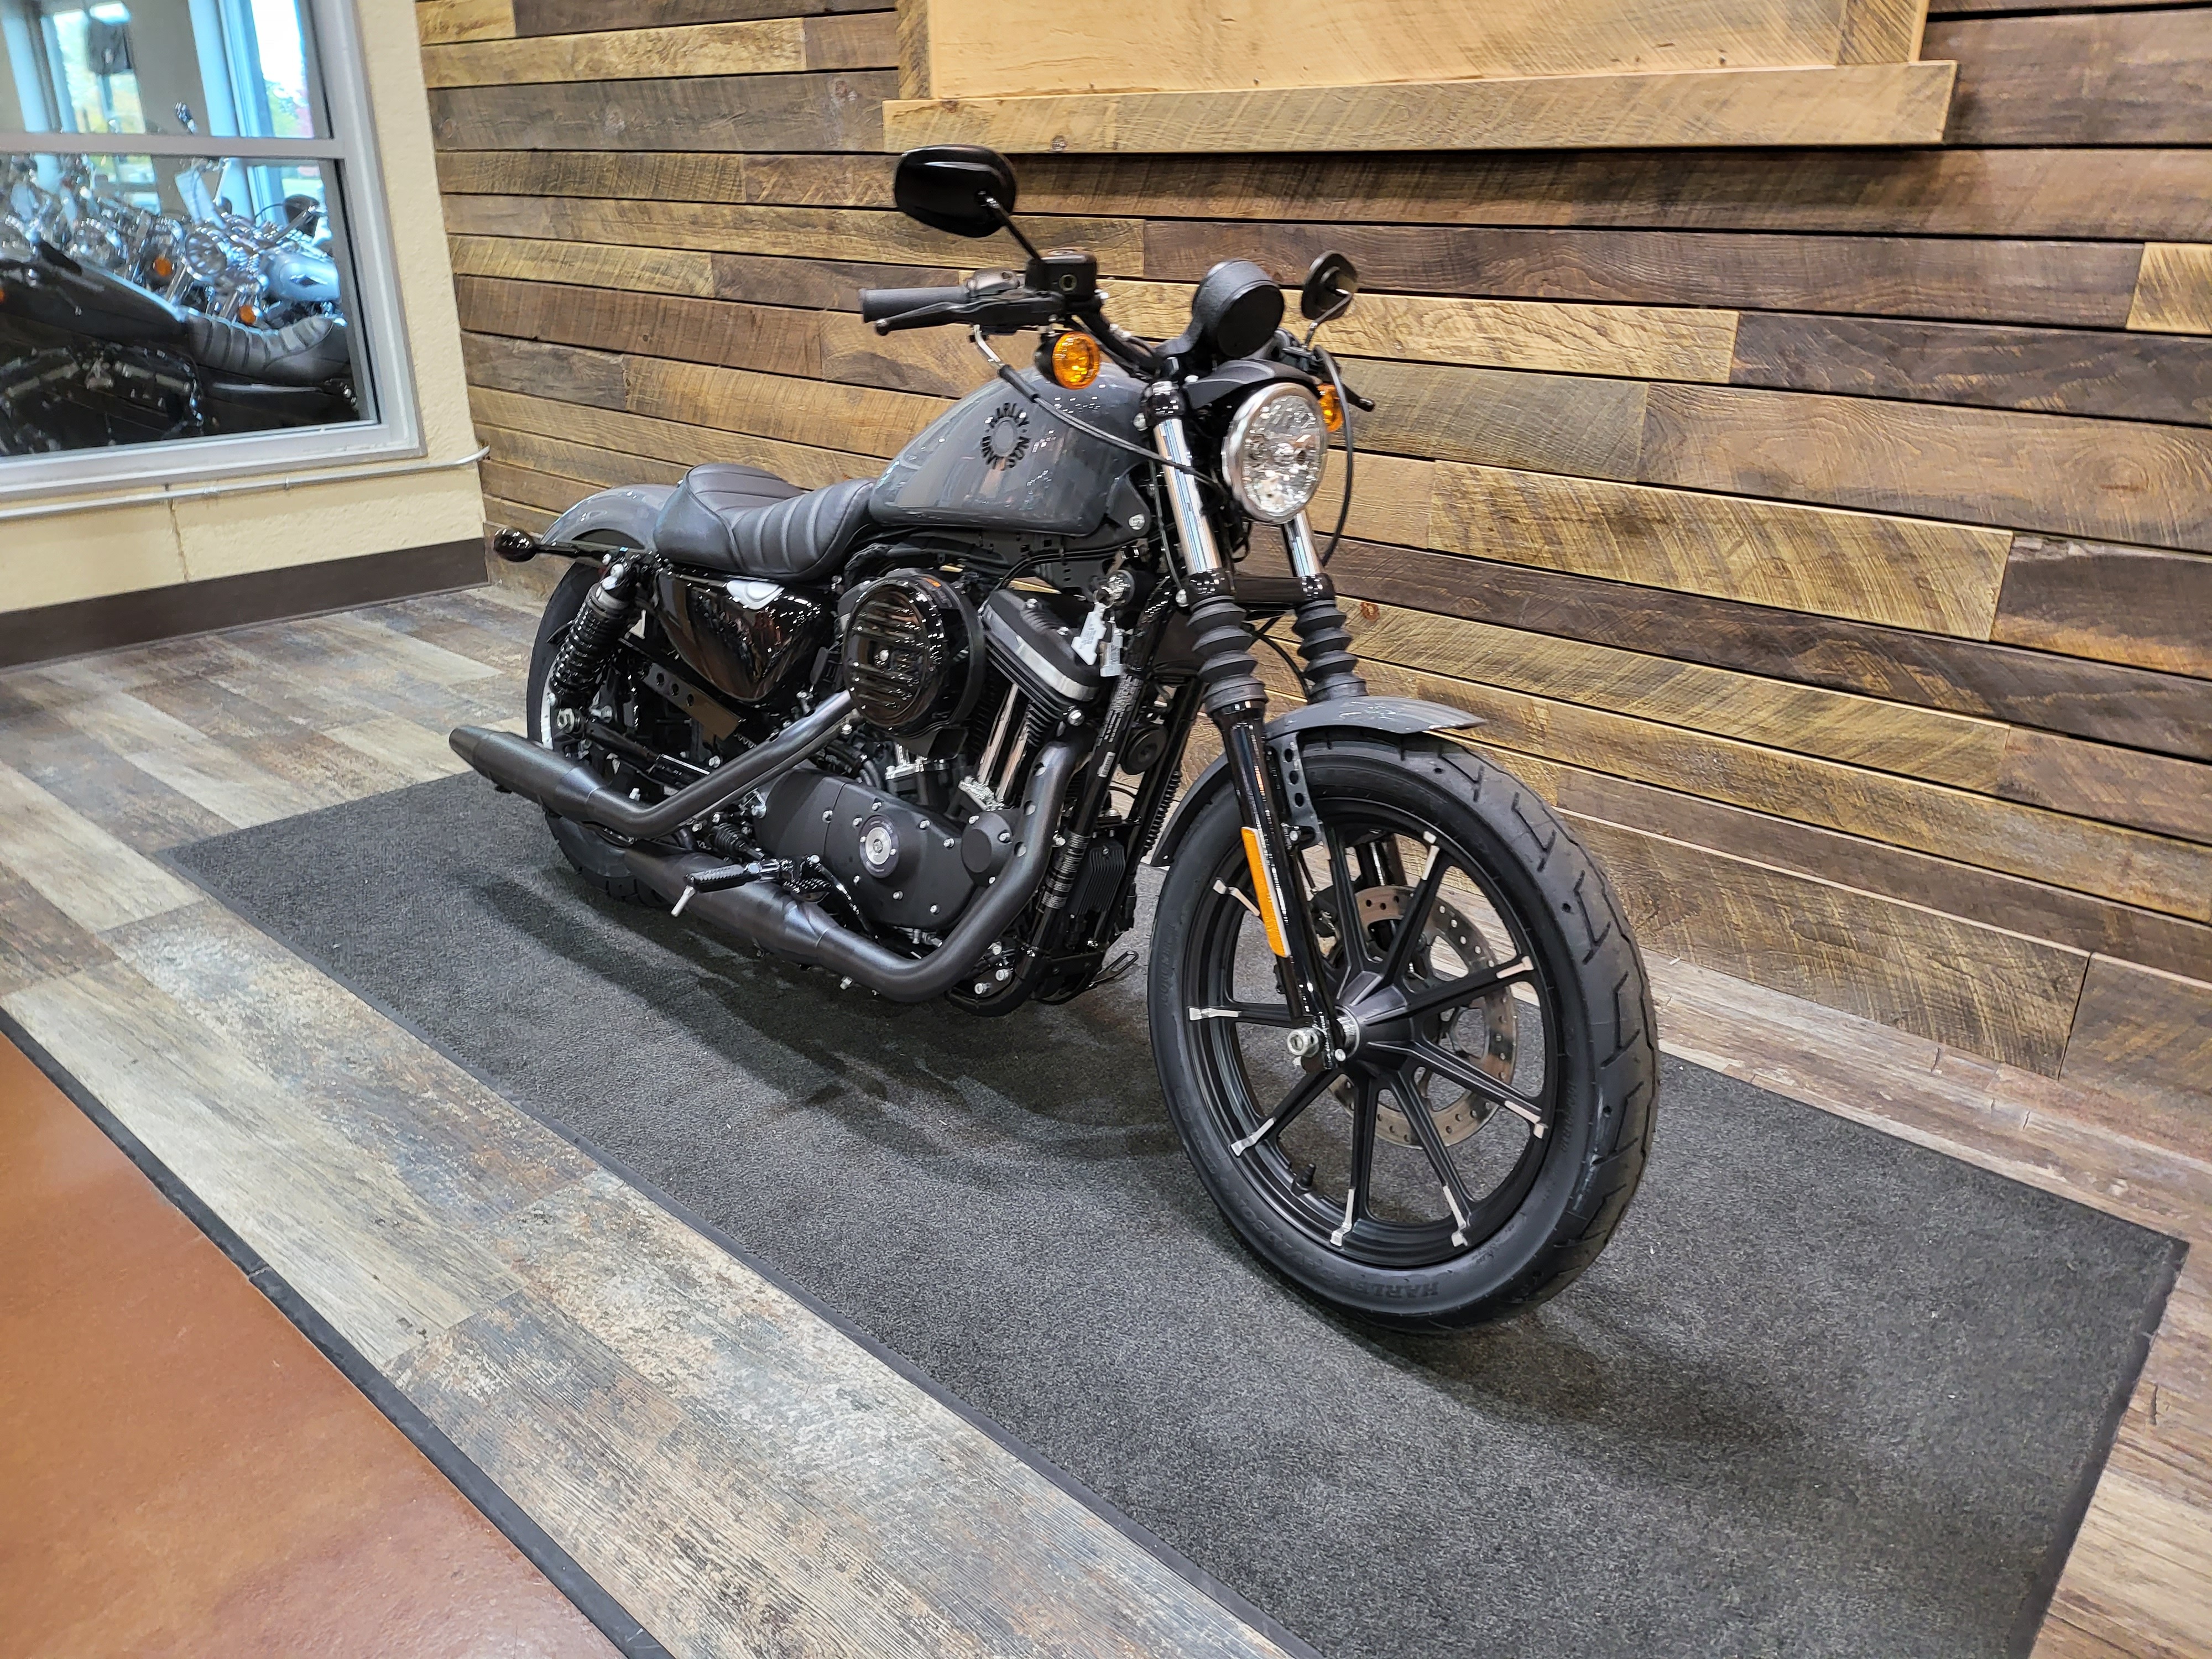 2022 Harley-Davidson Sportster Iron 883 at Bull Falls Harley-Davidson